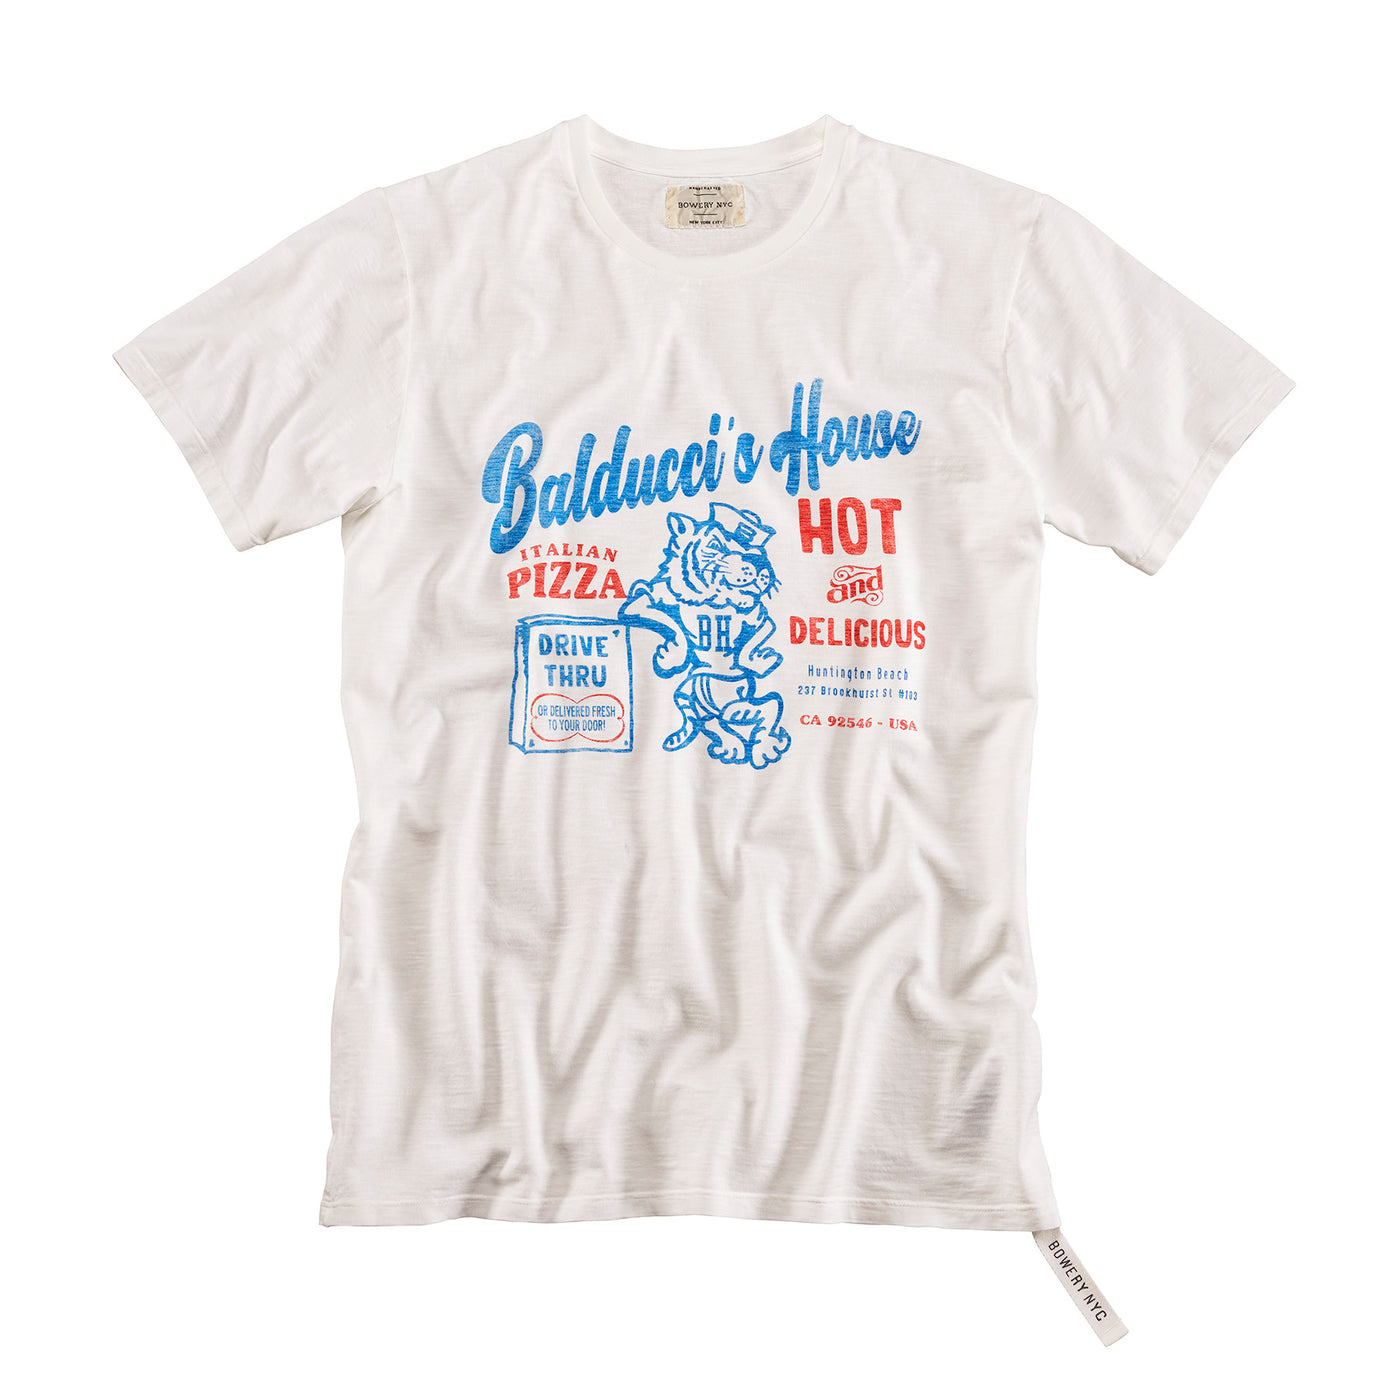 Bowery NYC T-Shirt Balduccis